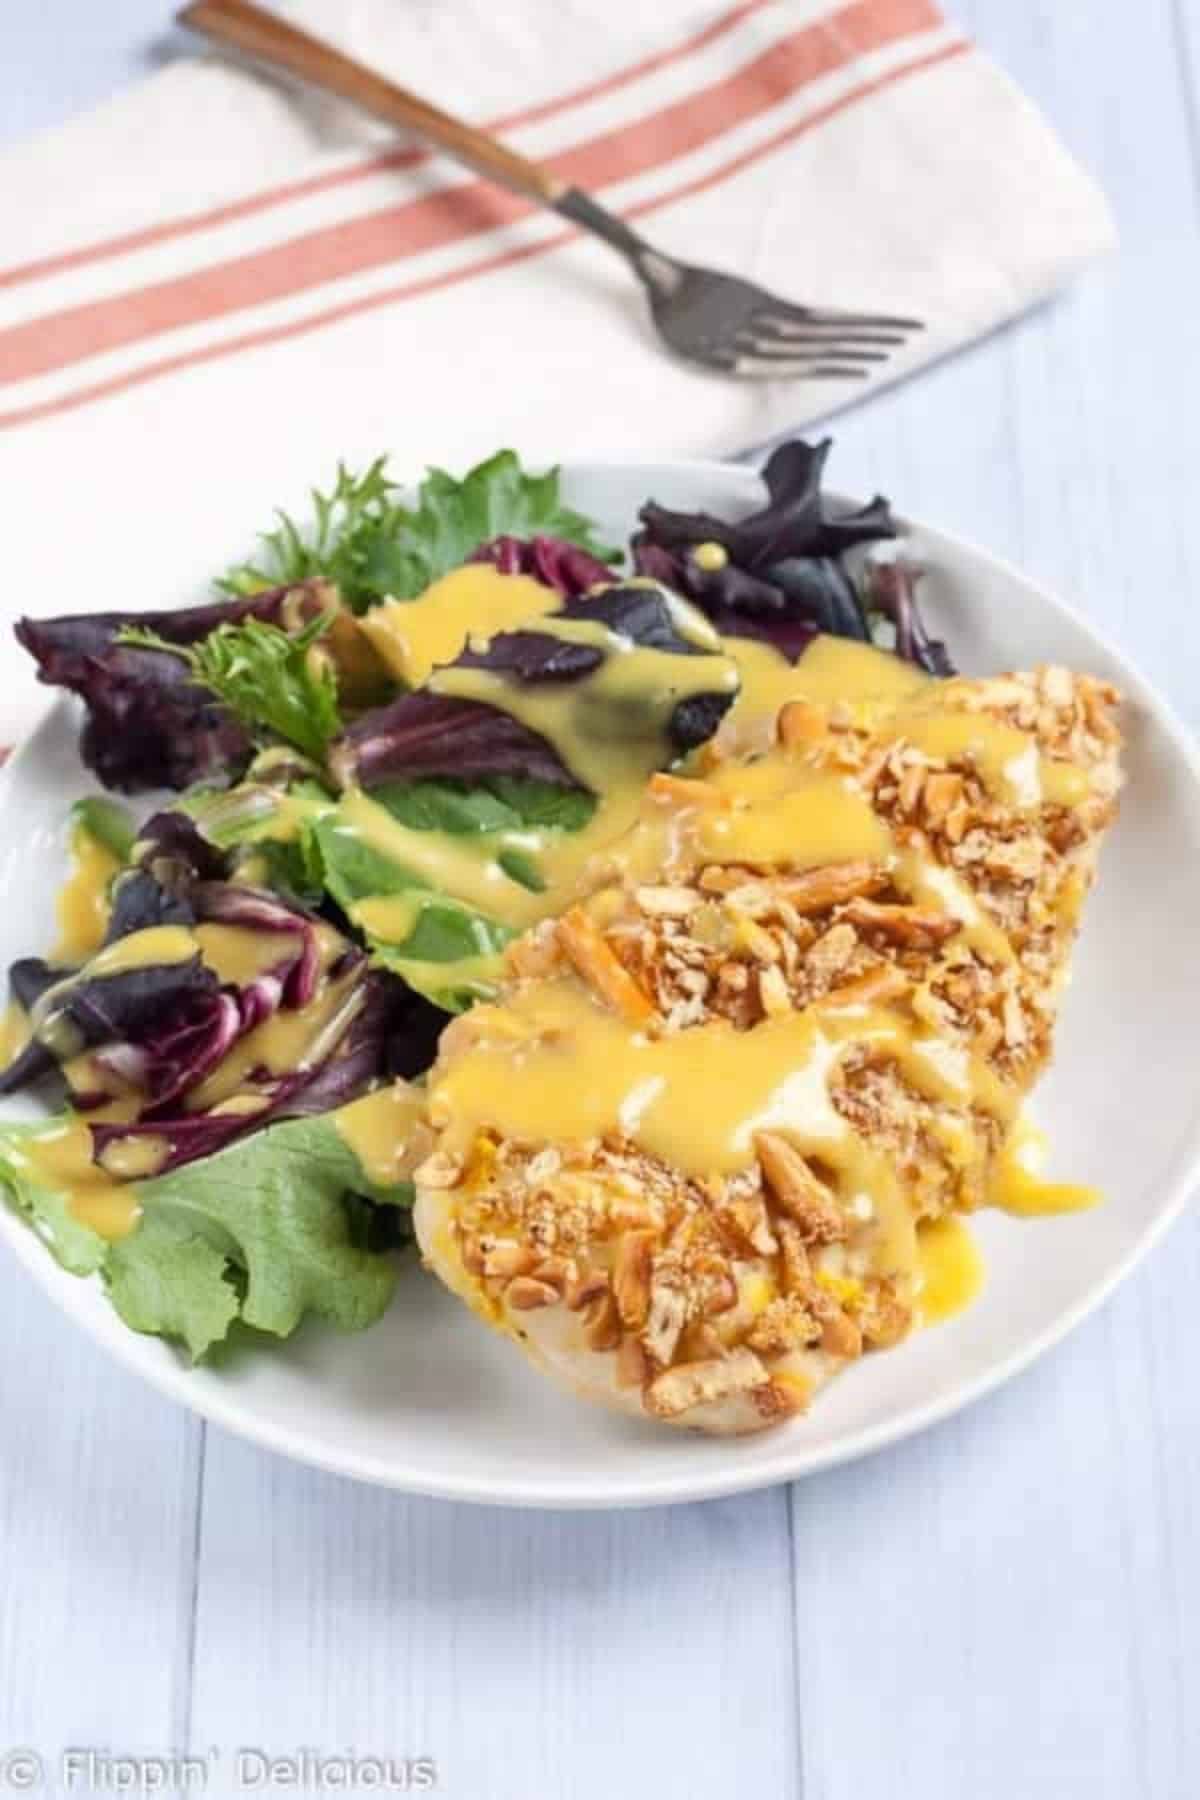 Delicious Gluten-Free Pretzel Chicken with veggies on a white plate.